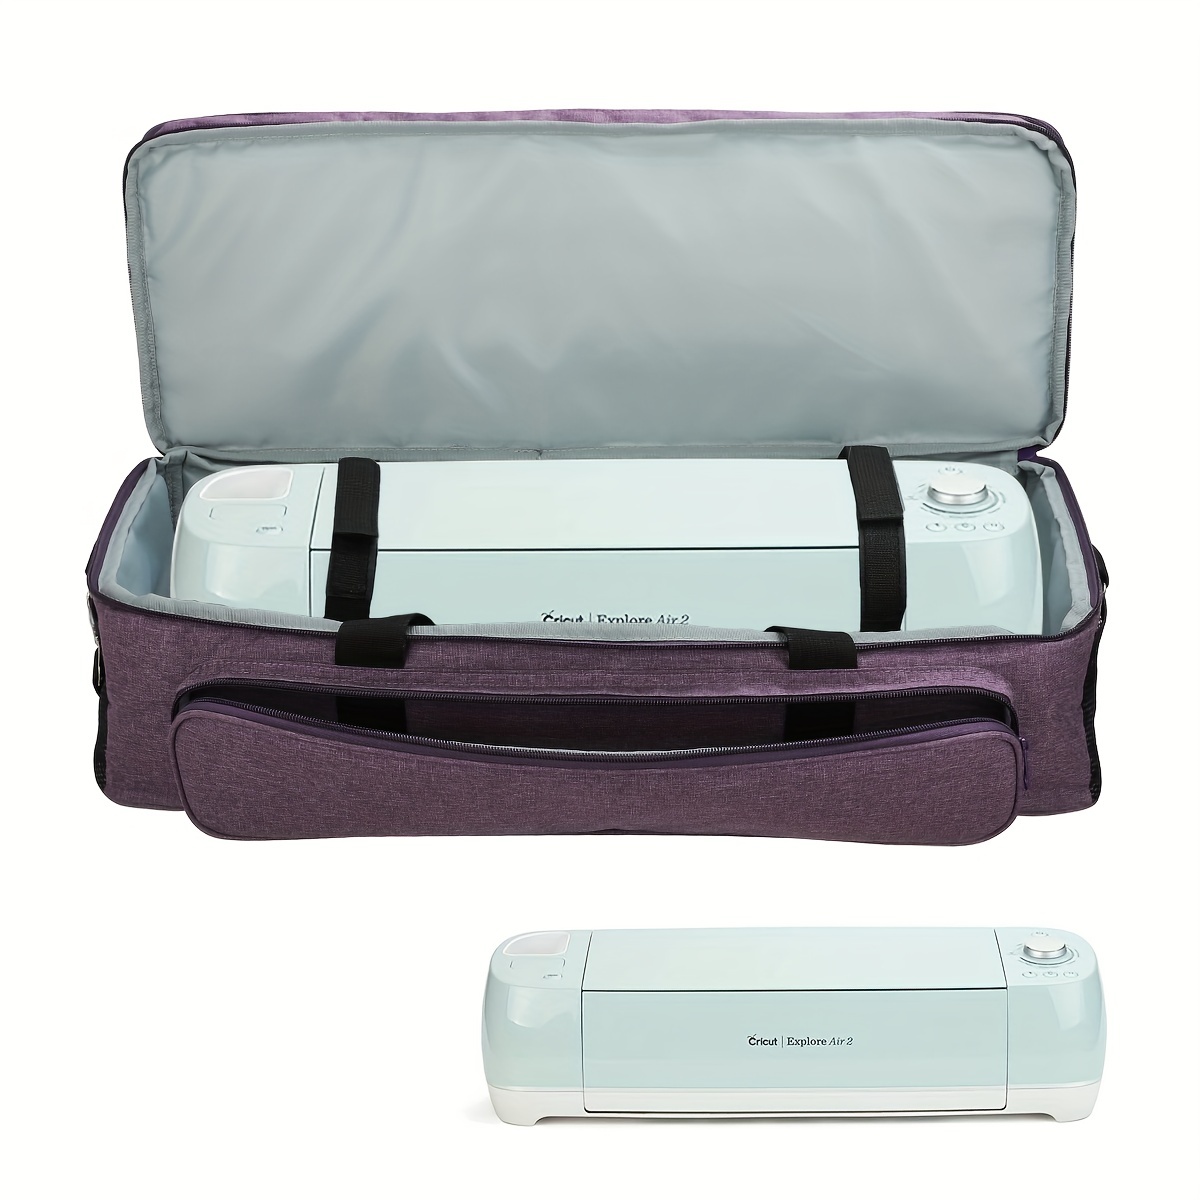 Storage Carrying Case Bag for Cricut Explore Air 2, Silhouette